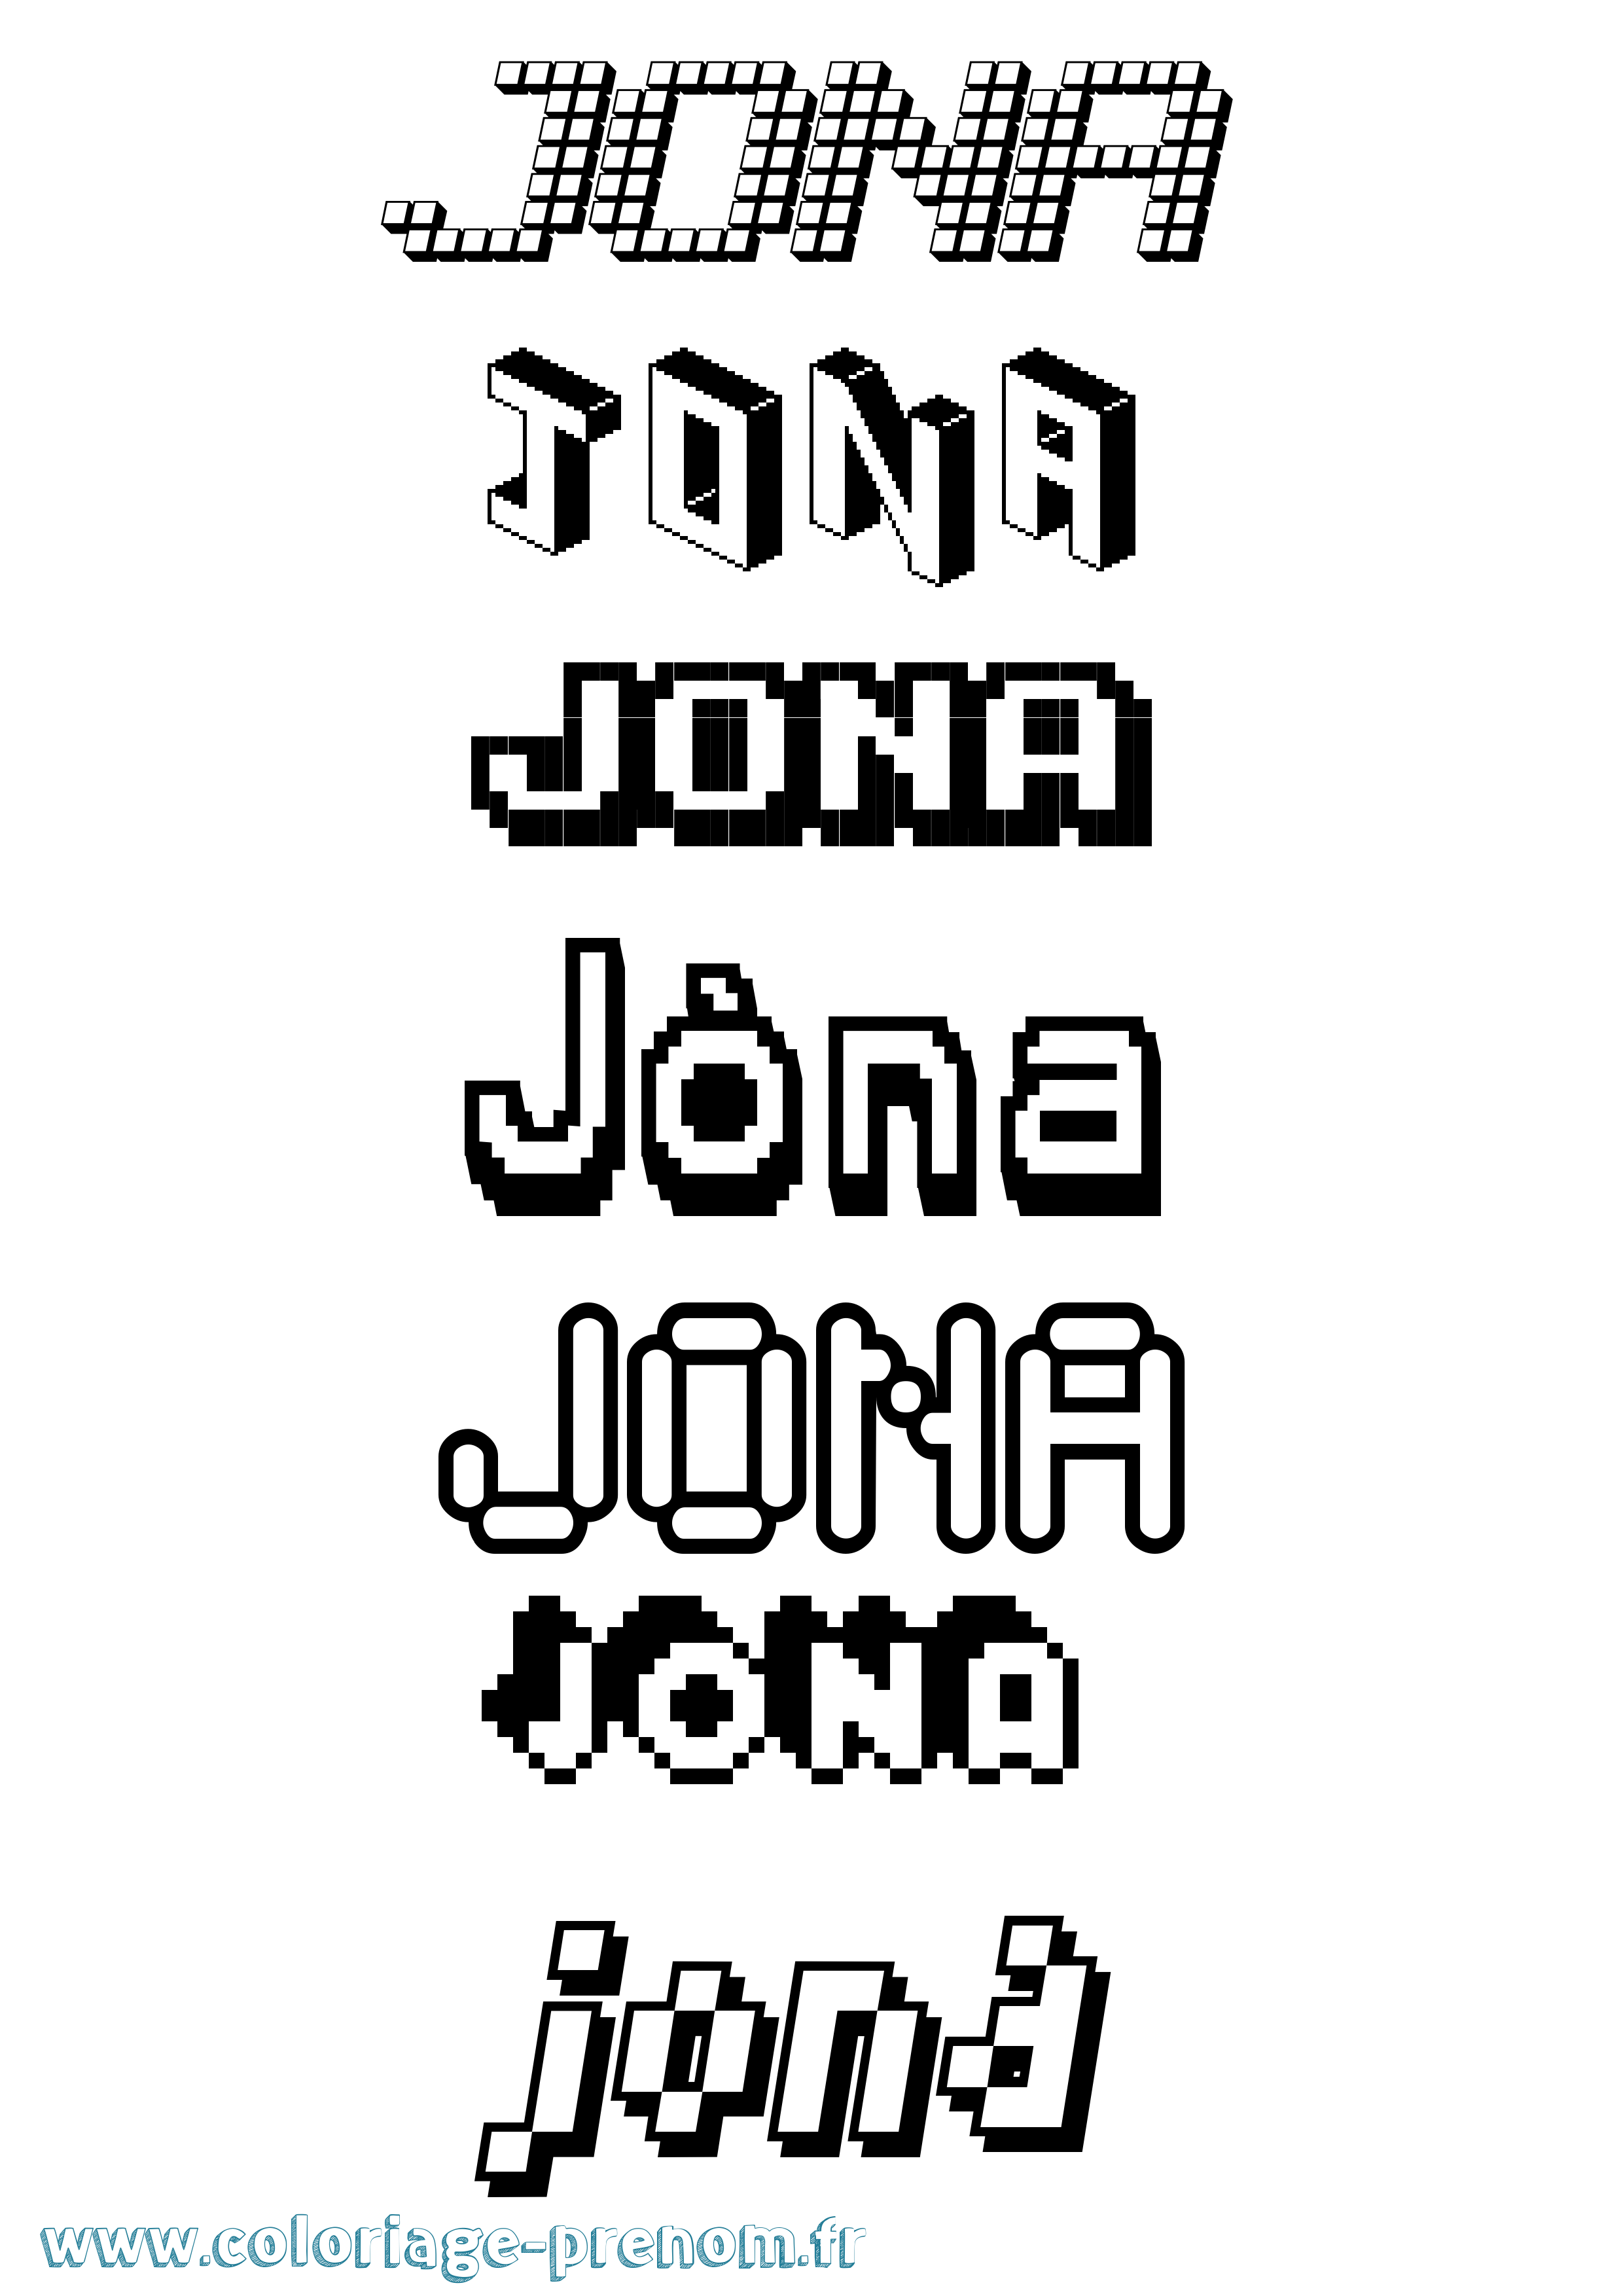 Coloriage prénom Jóna Pixel